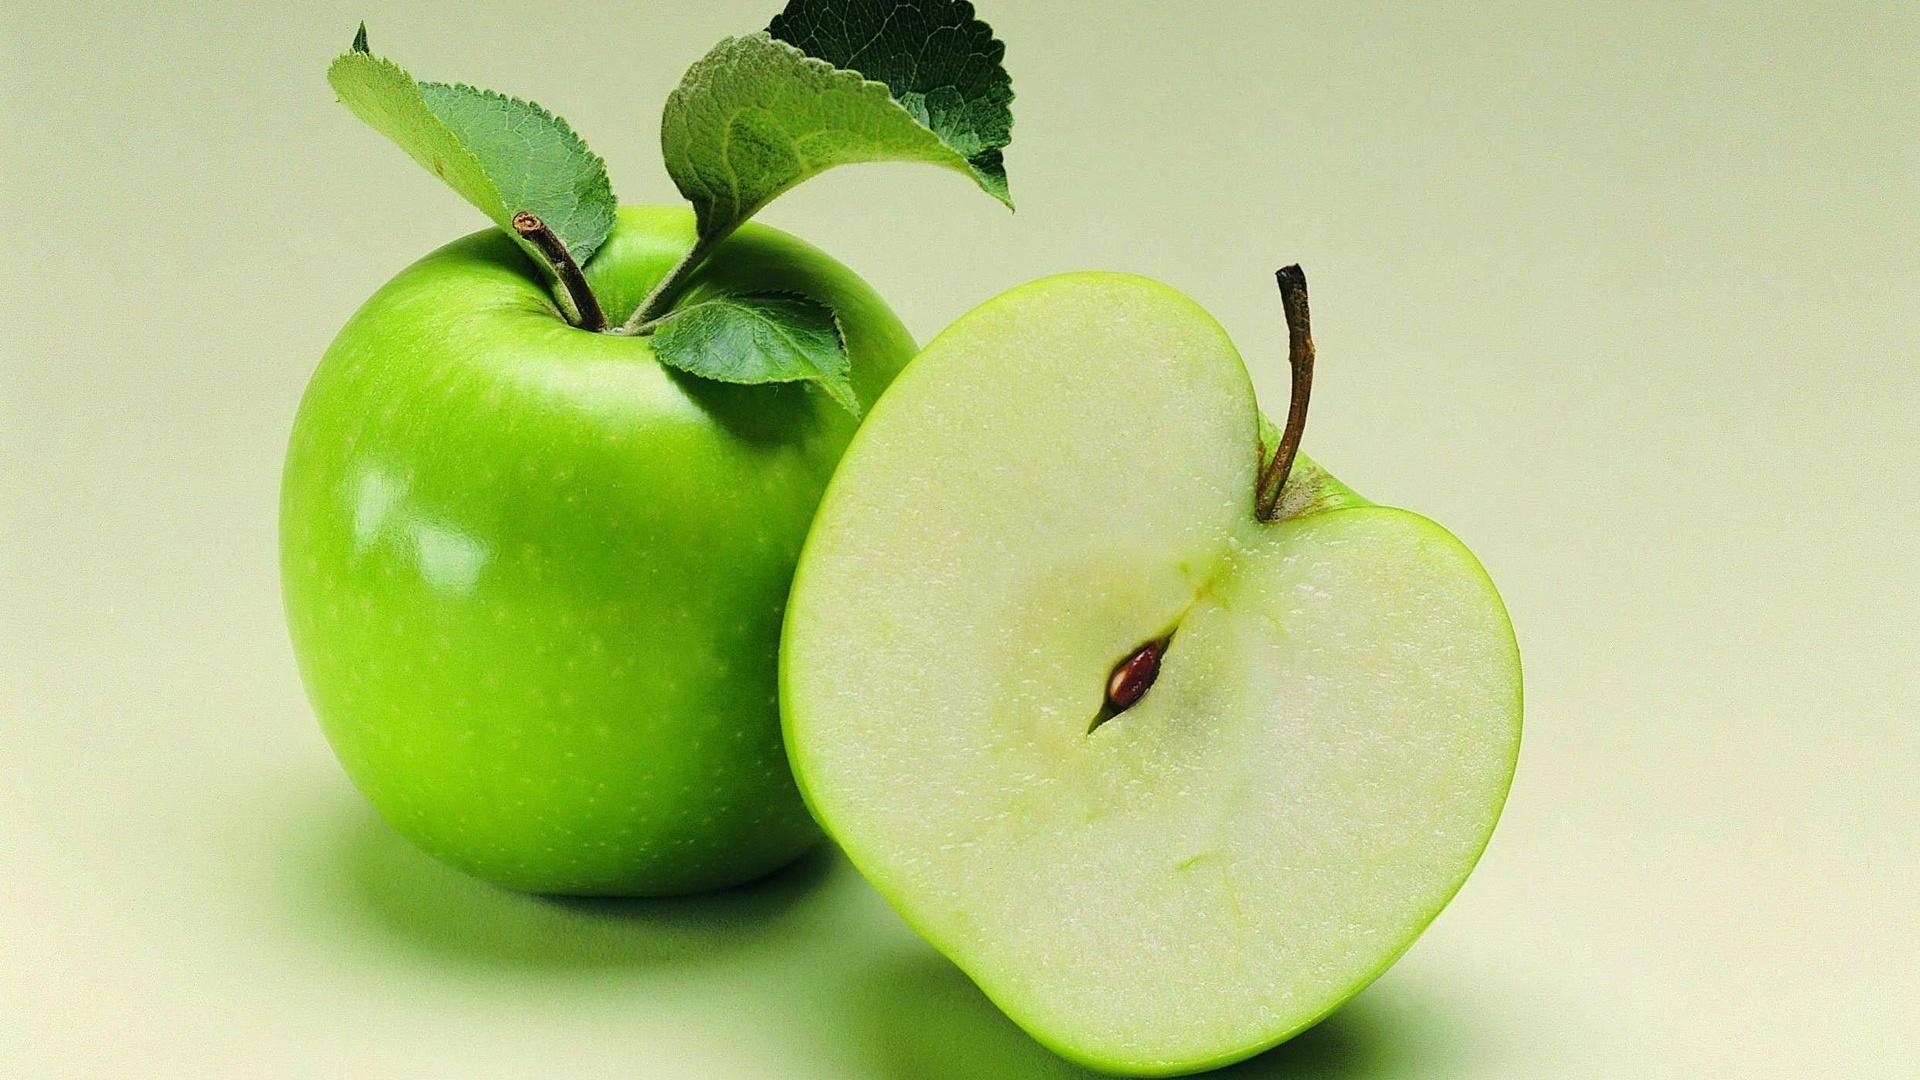 Apple Fruit wallpaper for computer